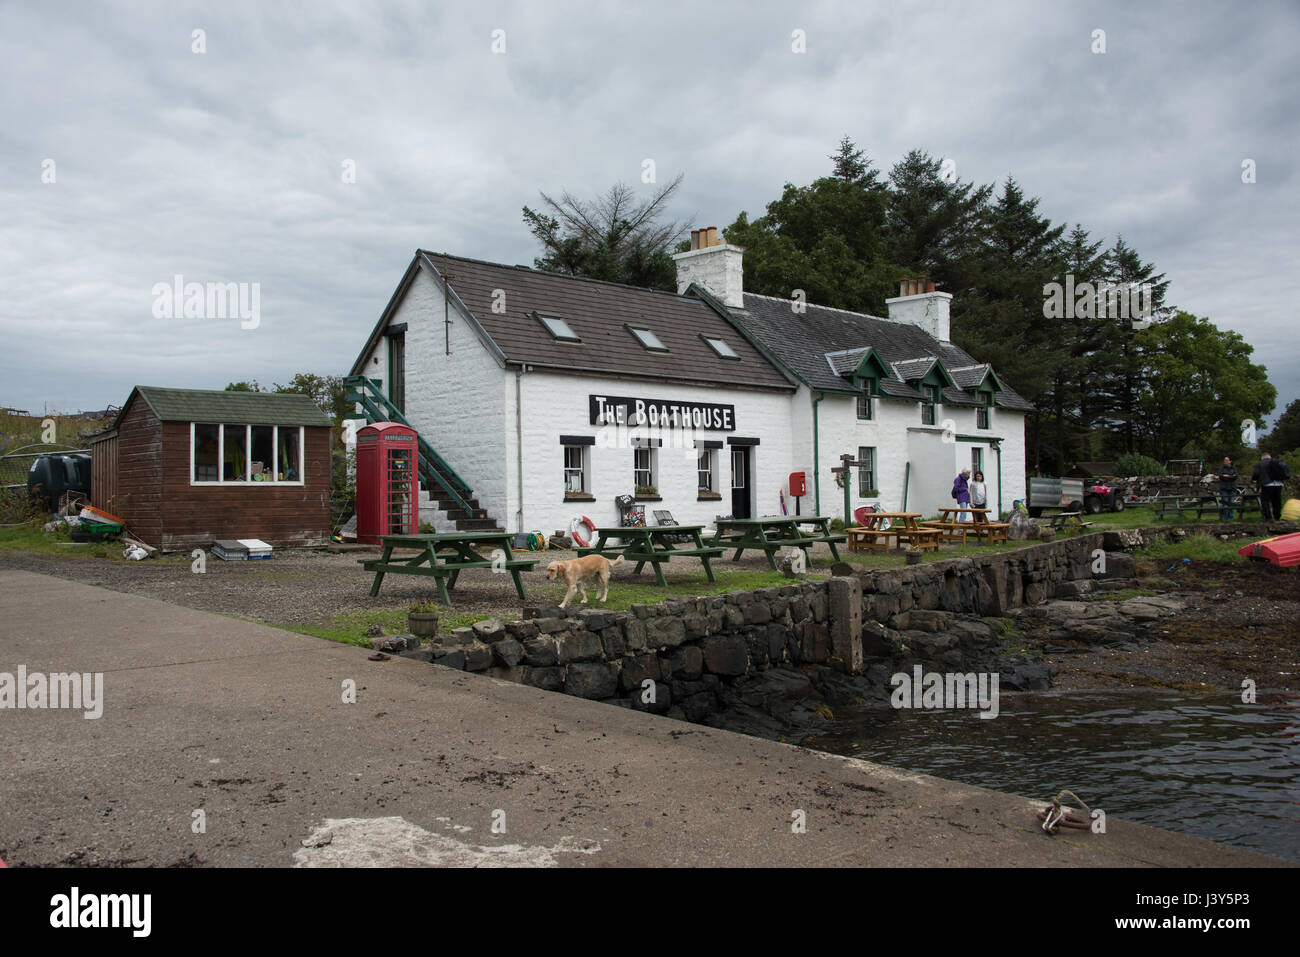 The Boathouse Inn on Isle of Ulva, Scotland. Stock Photo